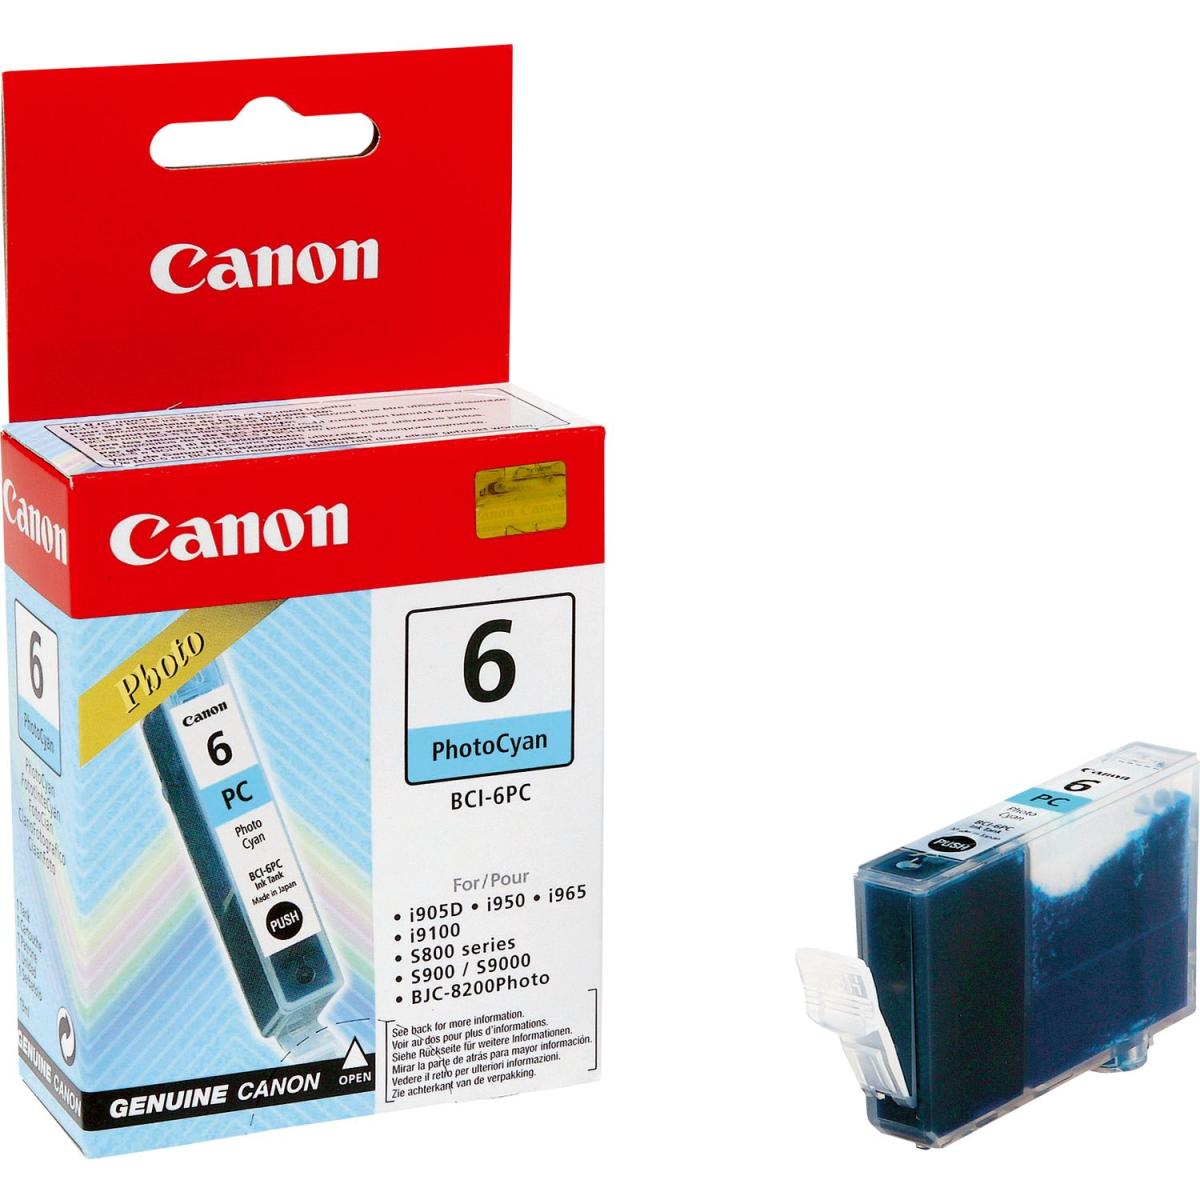 Canon BCI6PC Ink / Inkjet Cartridge Photo Cyan (Original)